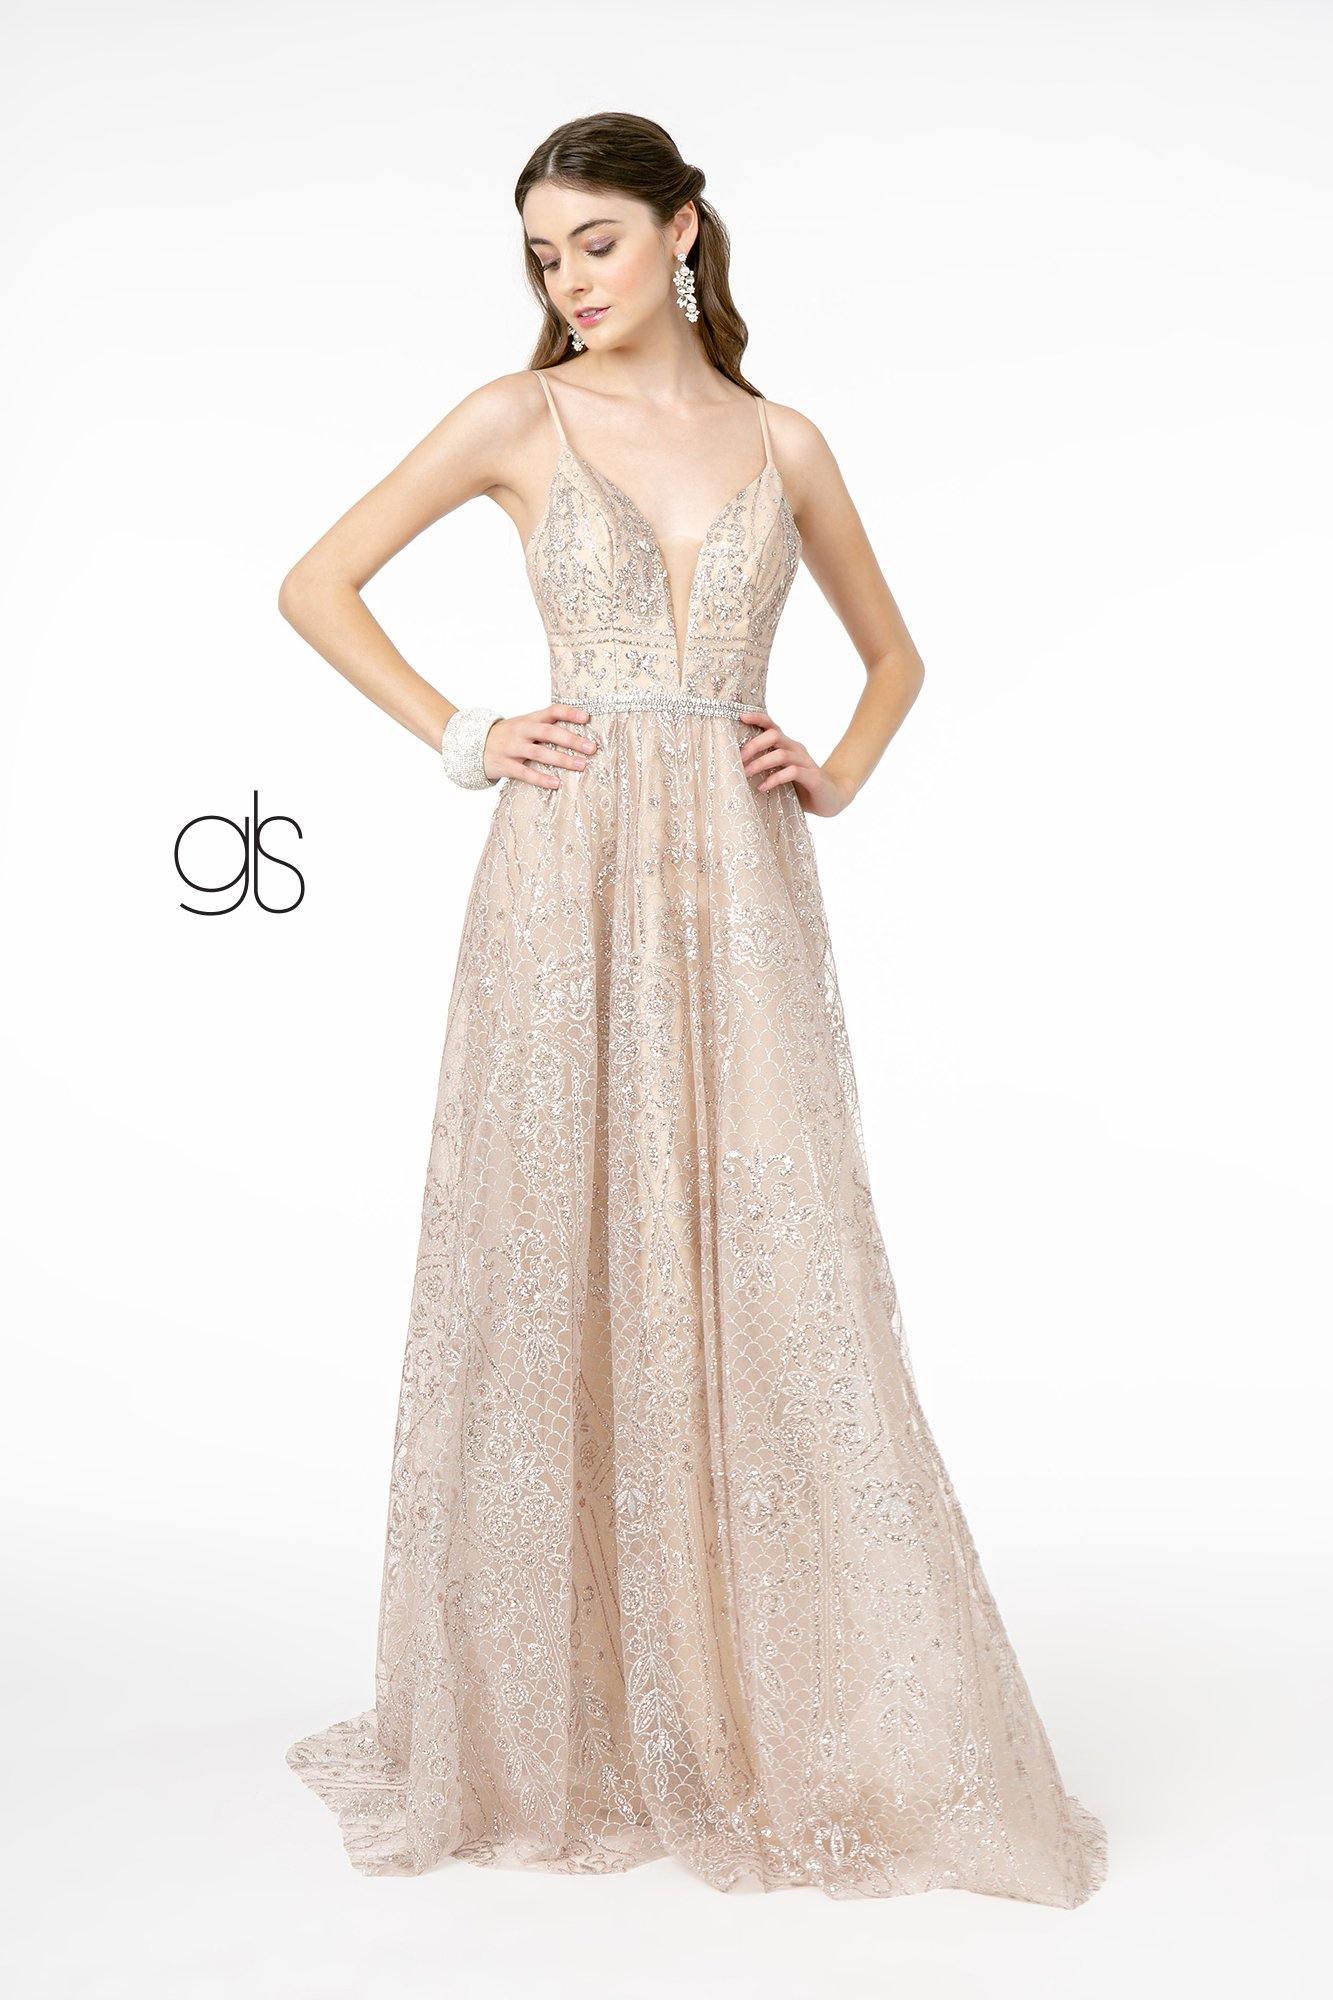 Glittter Mesh Long Prom Dress Sale - The Dress Outlet